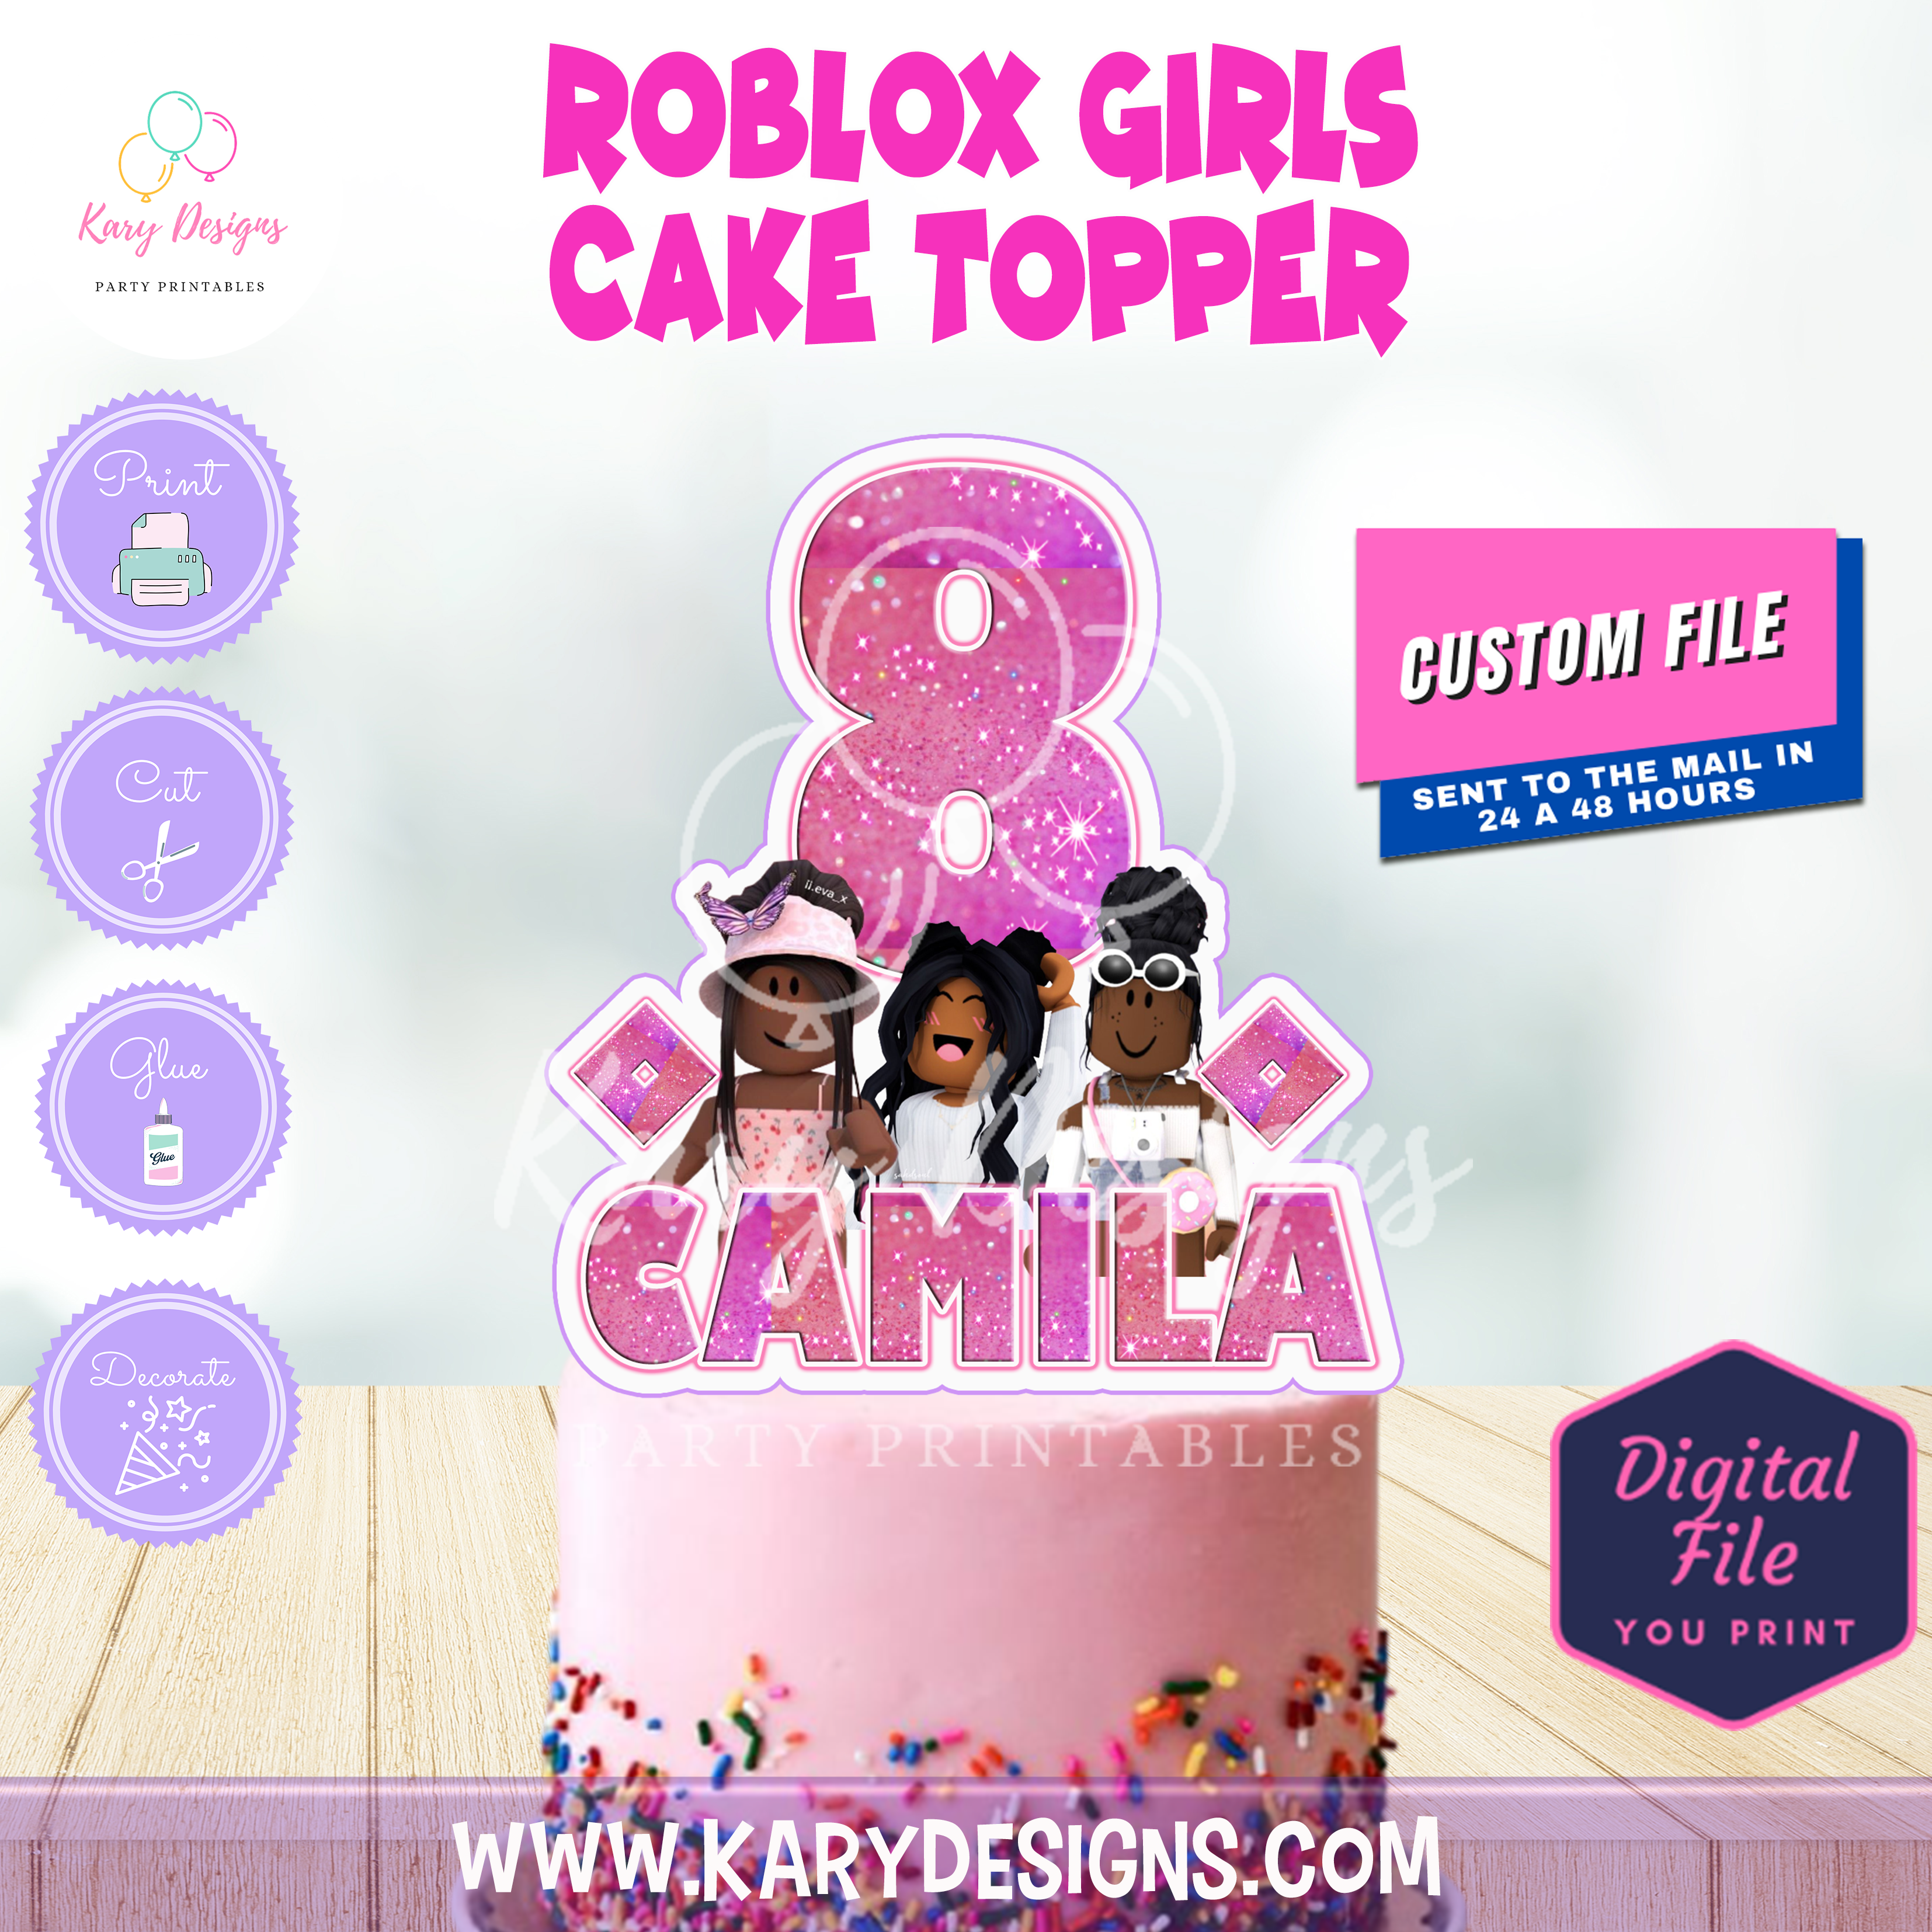 Yemyem's Crazetions | ROBLOX CAKE TOPPERS DESIGN #1 | Shopee Philippines